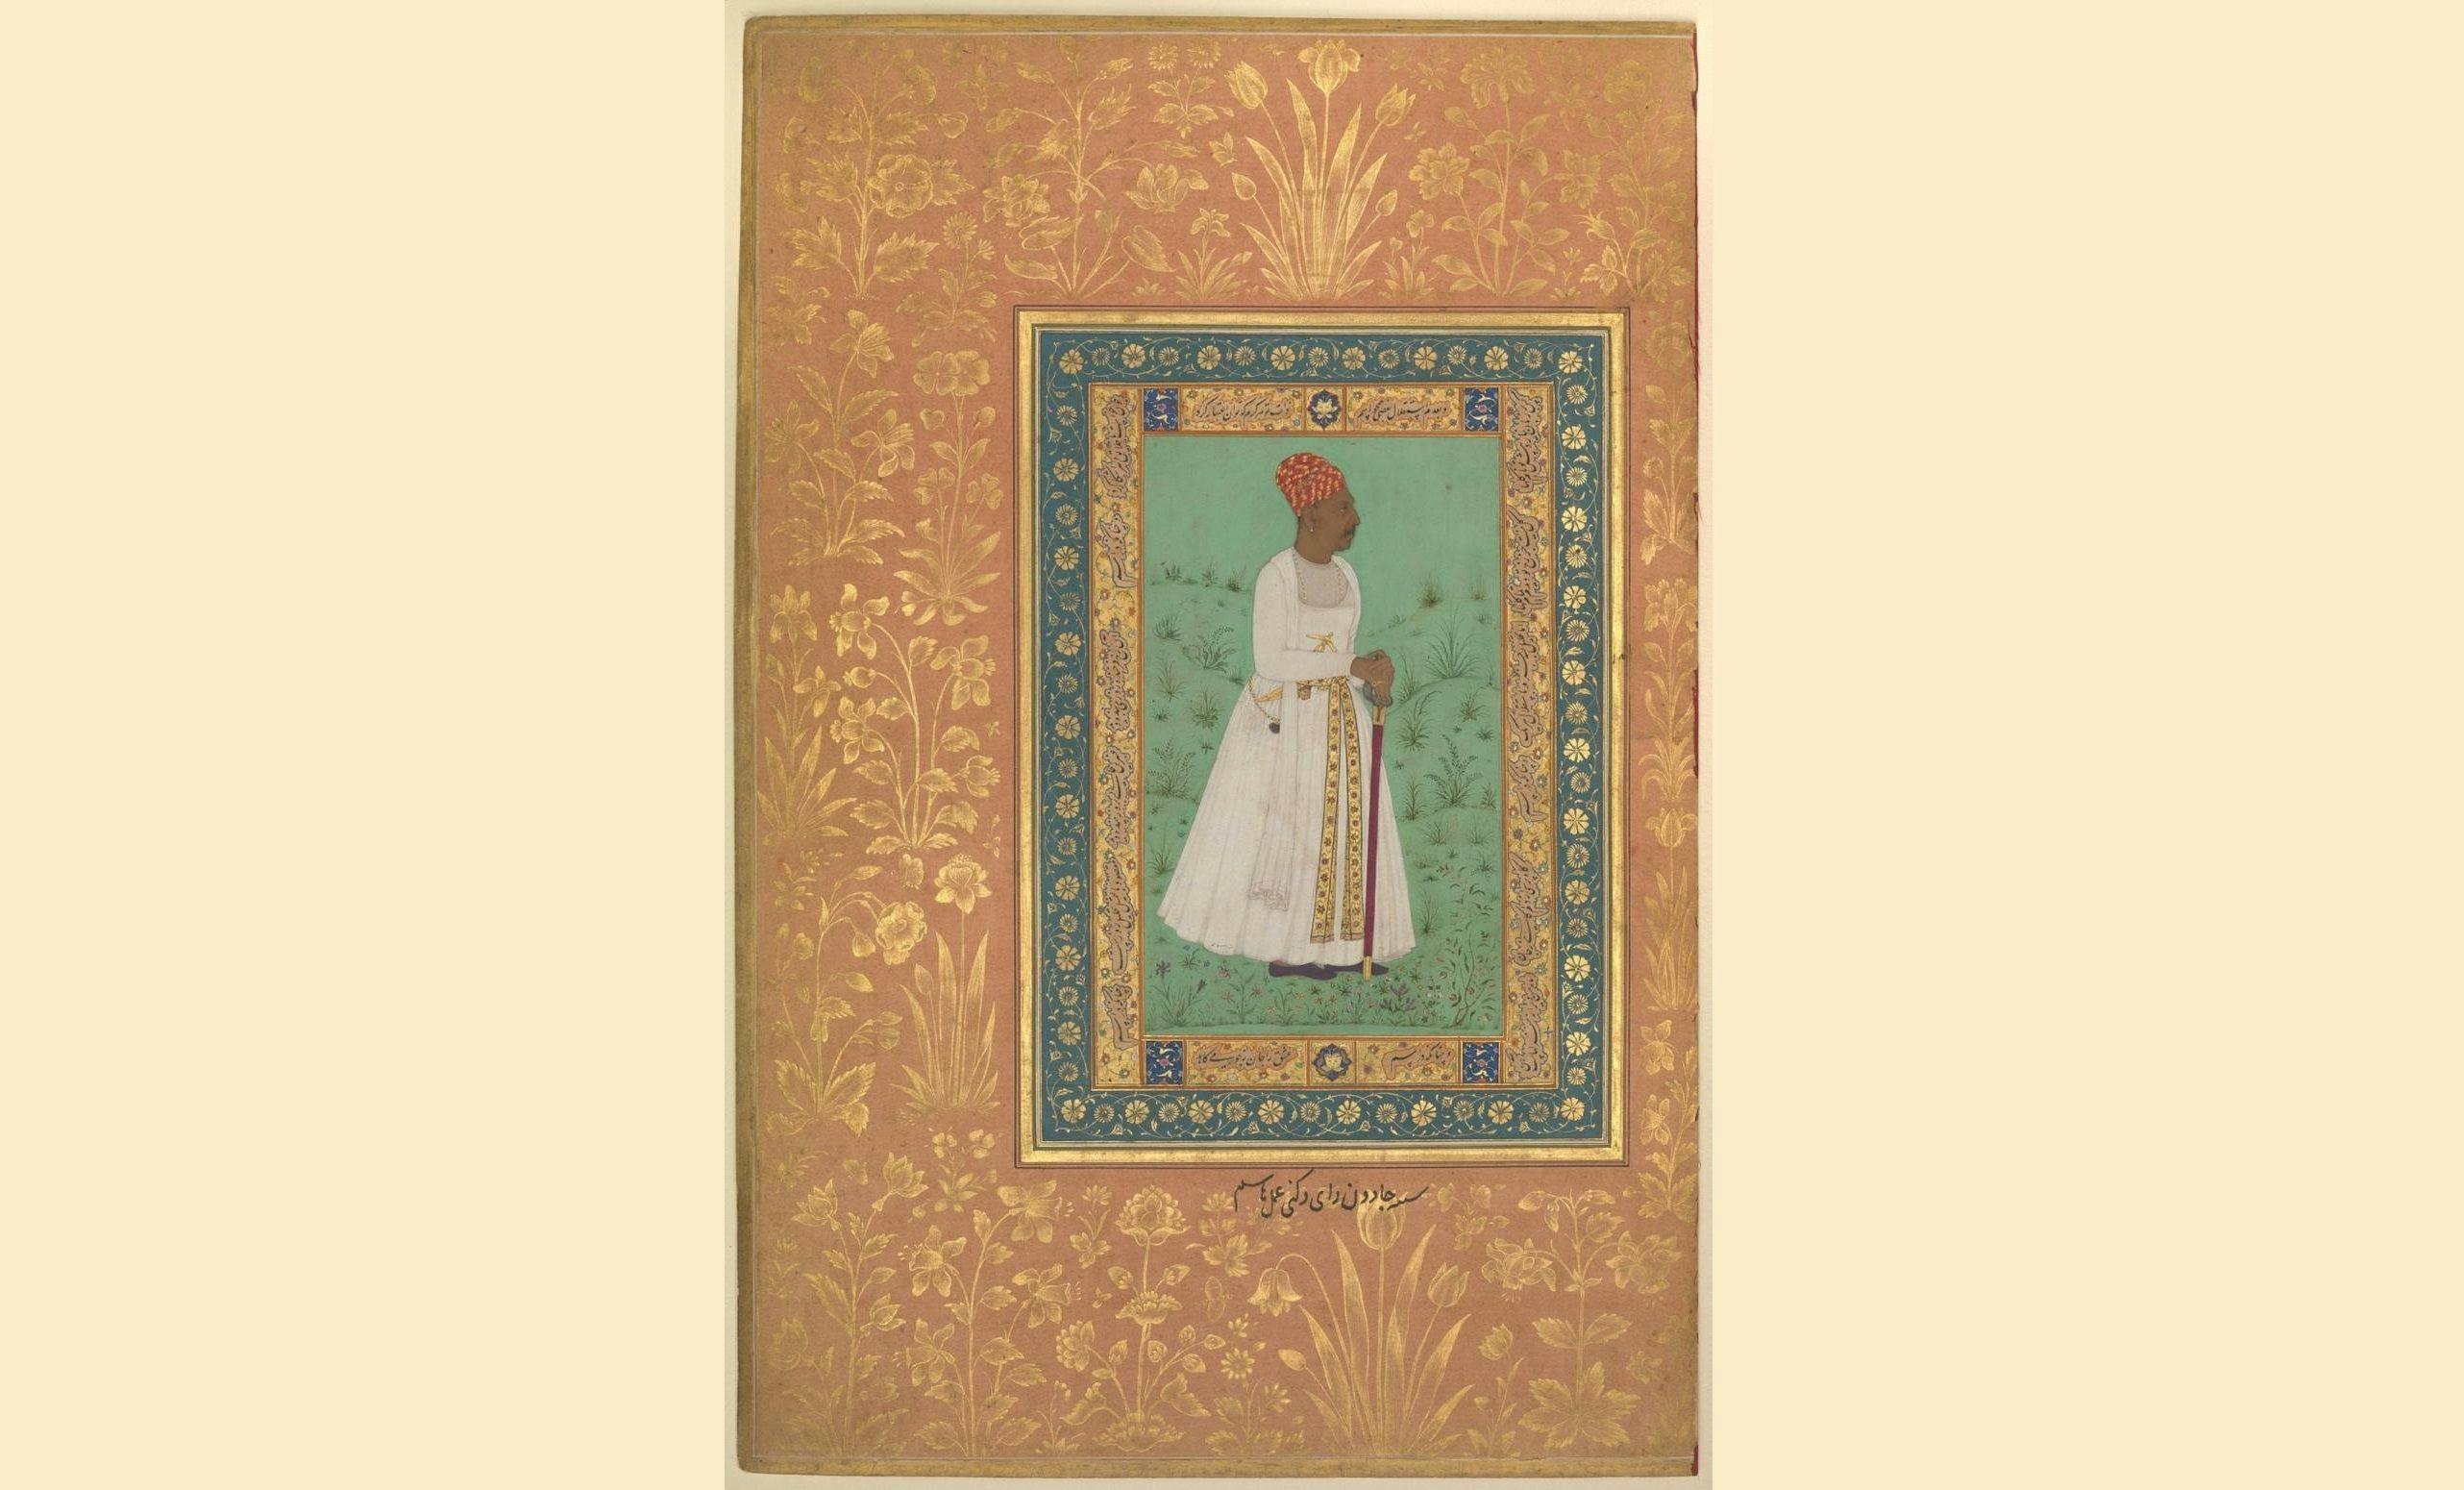 Miniature painting of Lakhuji Jadhavrao